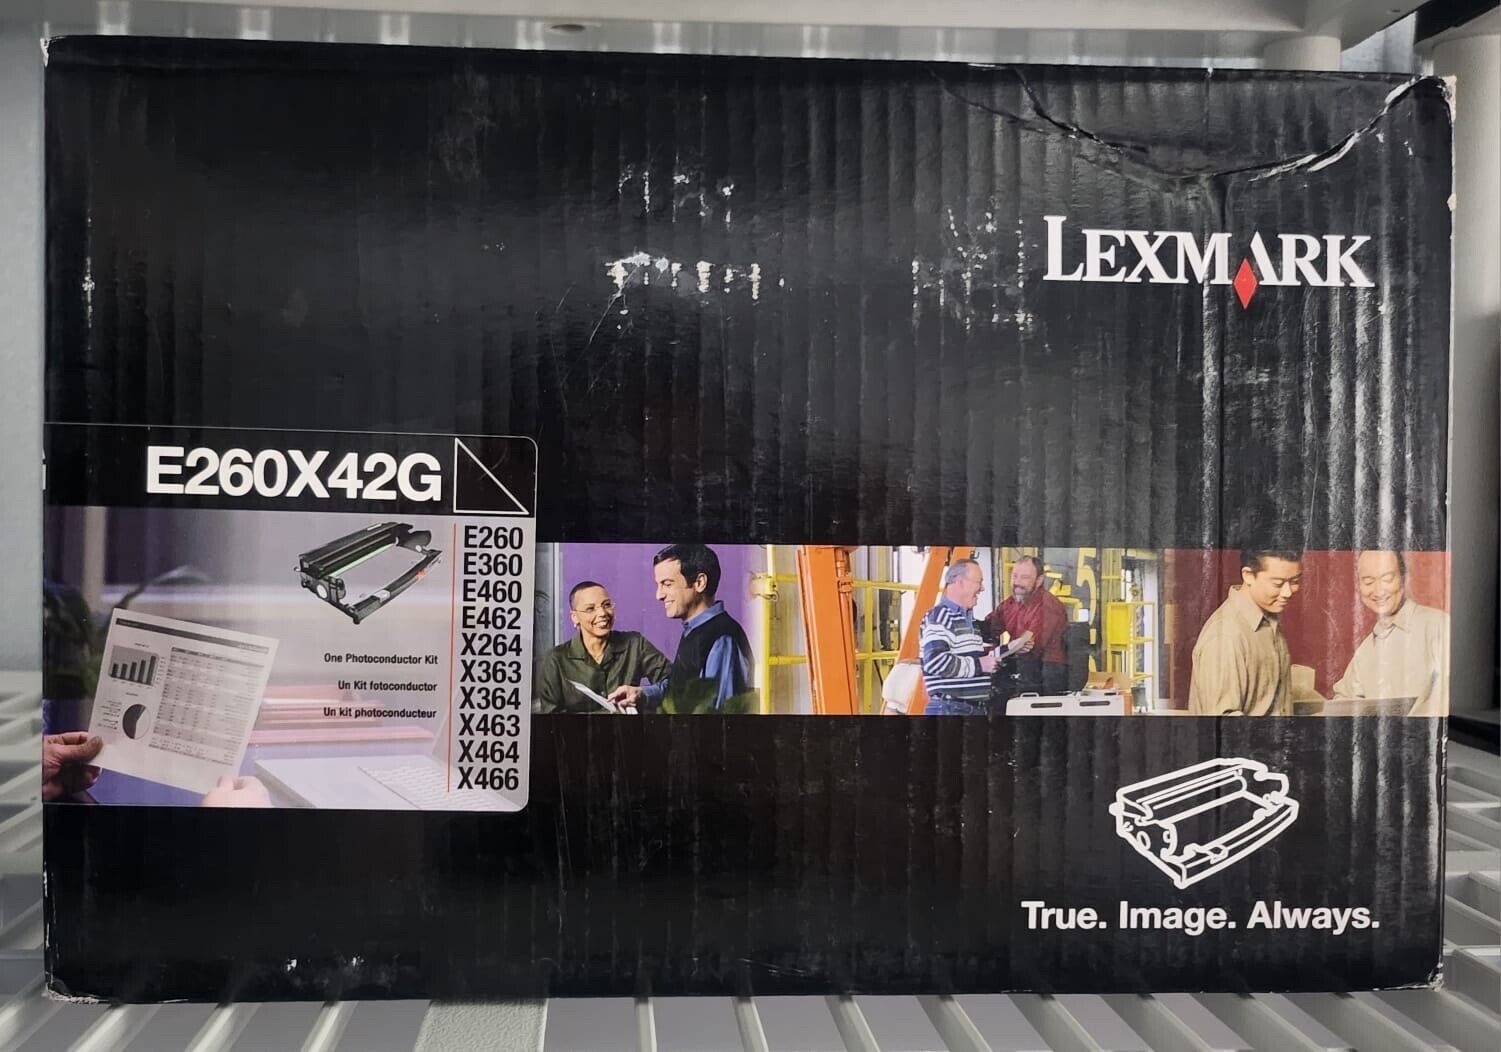 LEXMARK E260X42G Photoconductor Kit For E260, E360 and E460 Series Printers